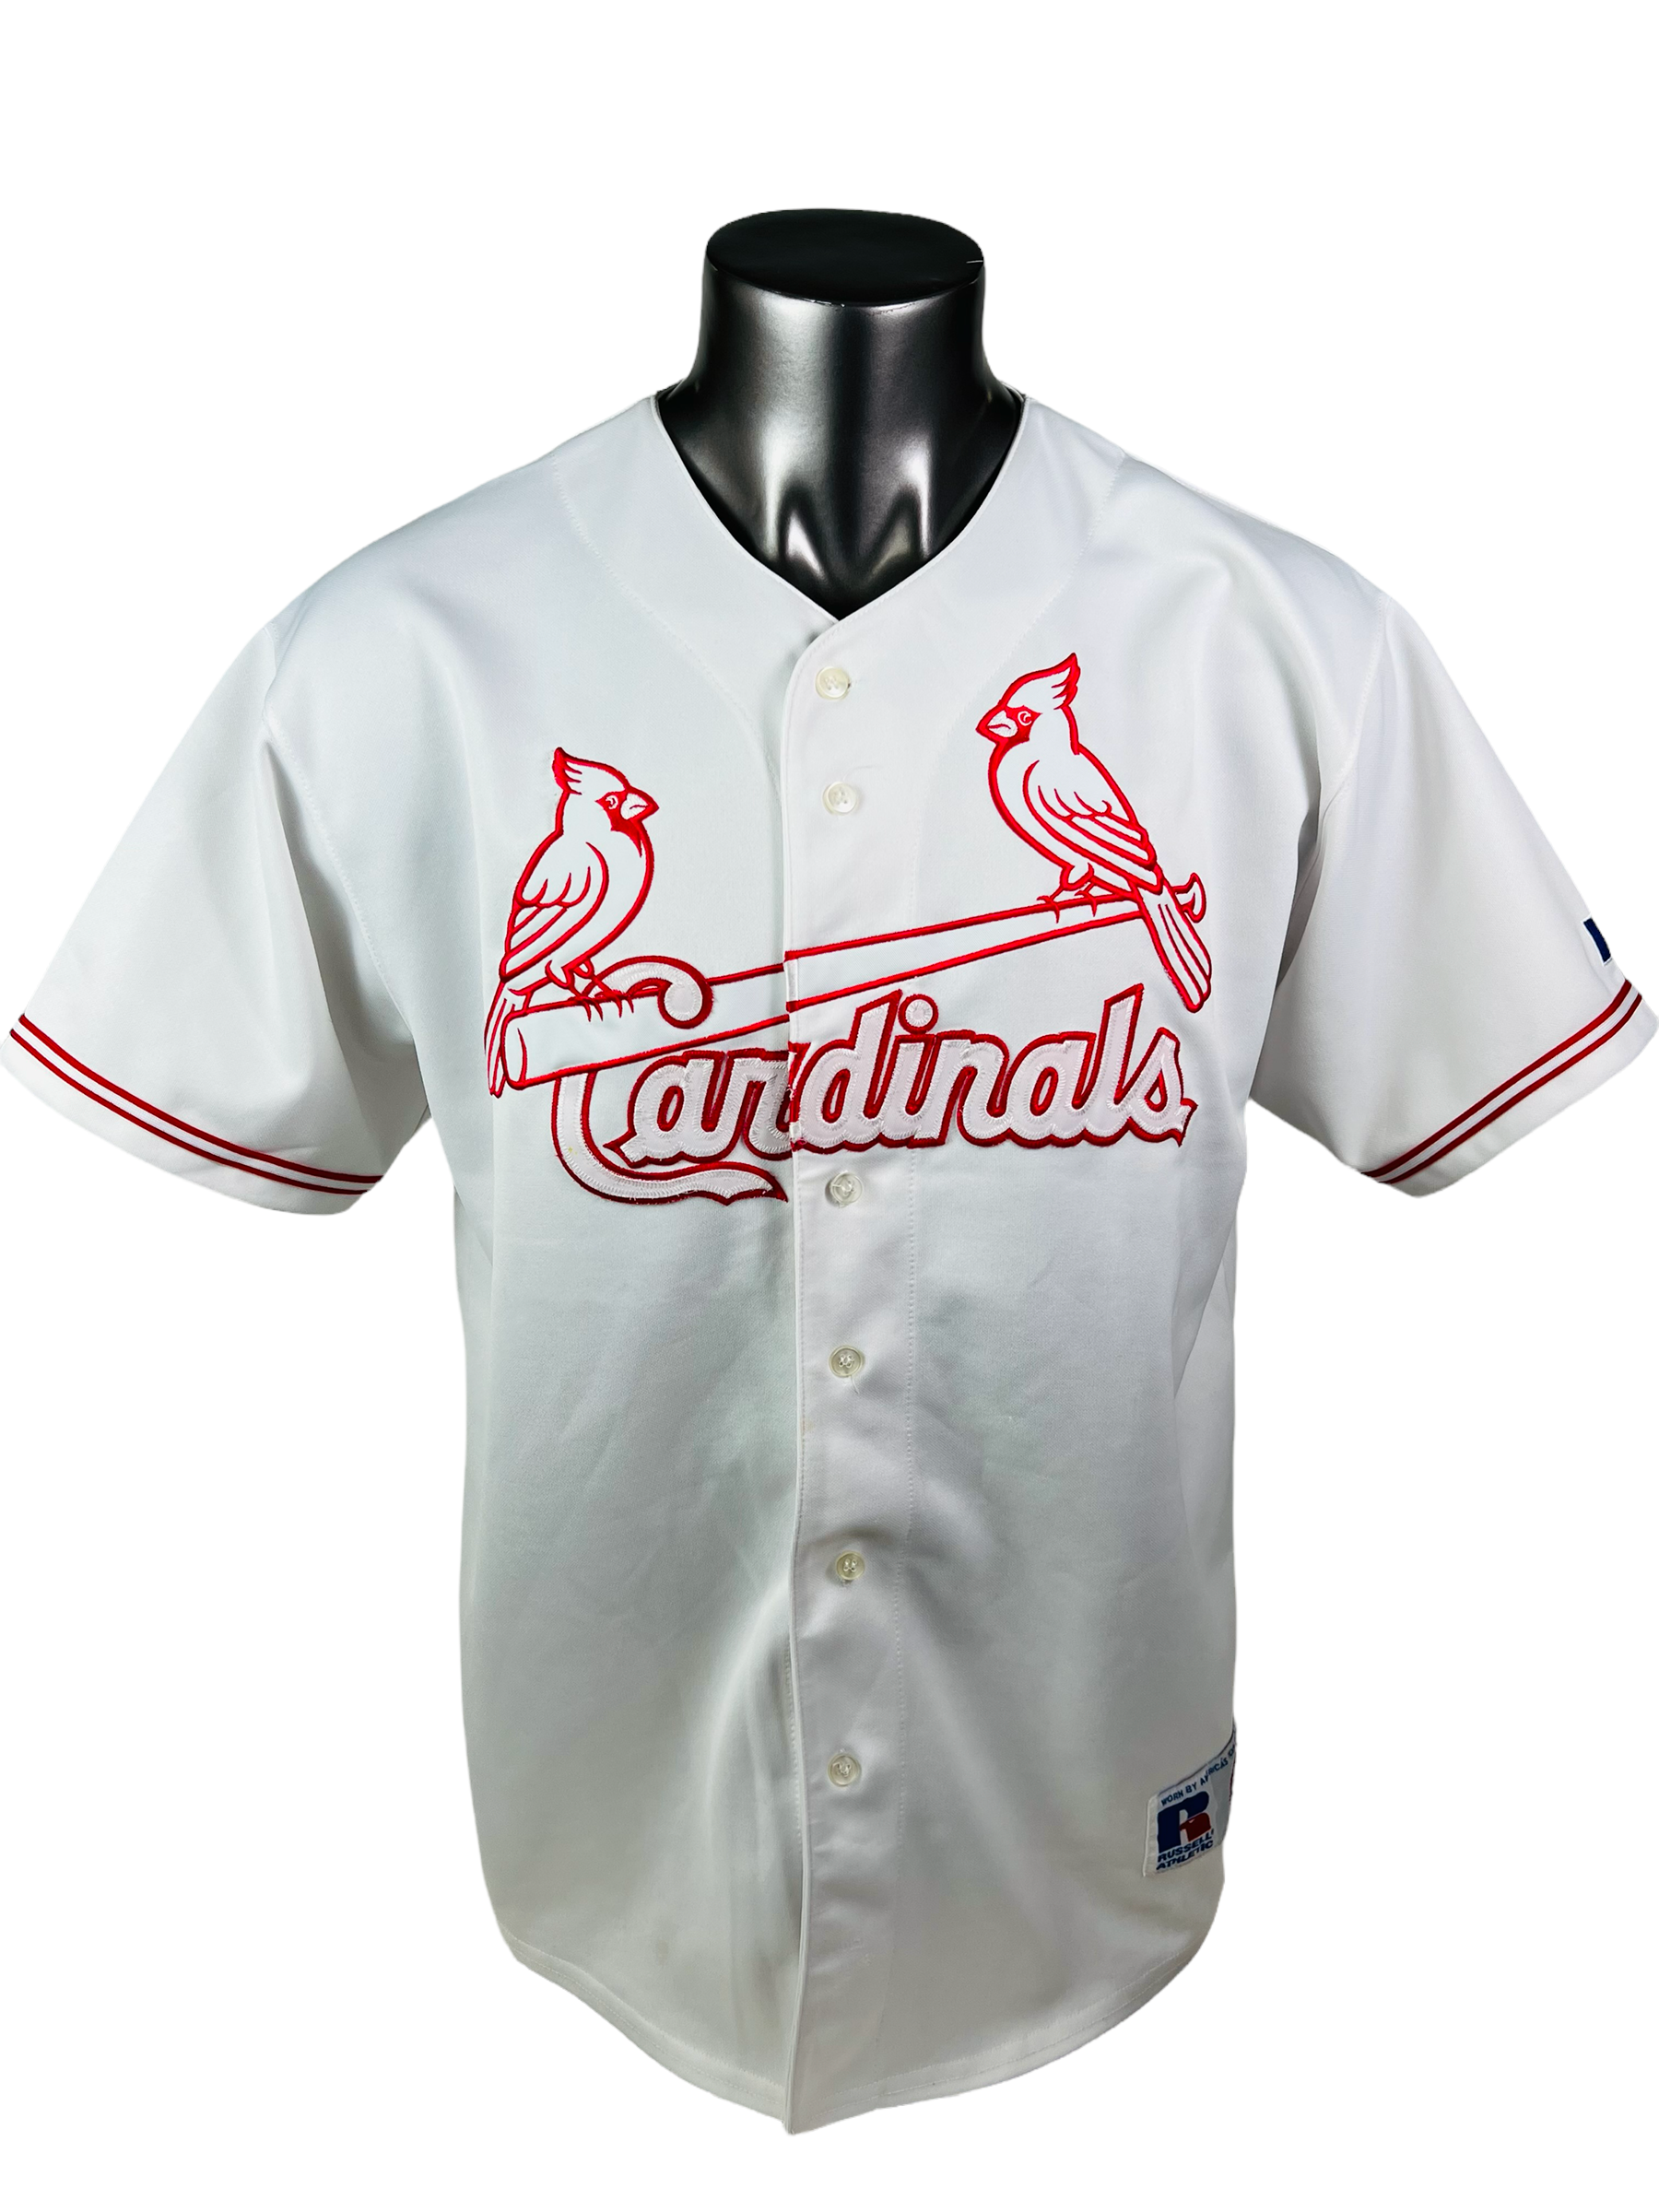 st louis cardinals jersey today